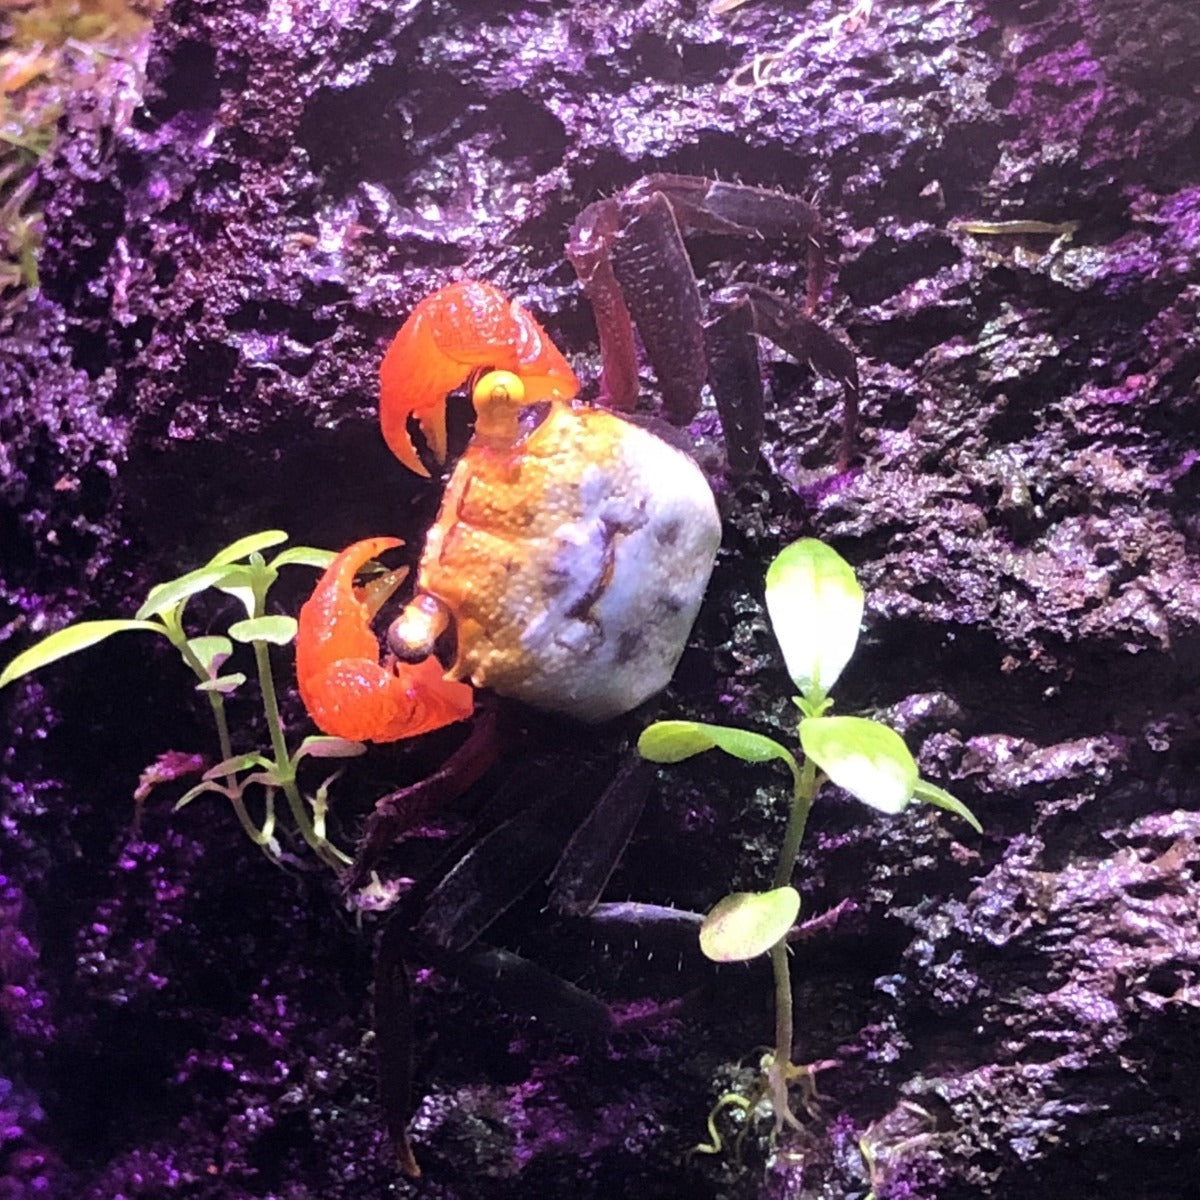 Rainbow Vampire Crab (Geosesarma rouxi)